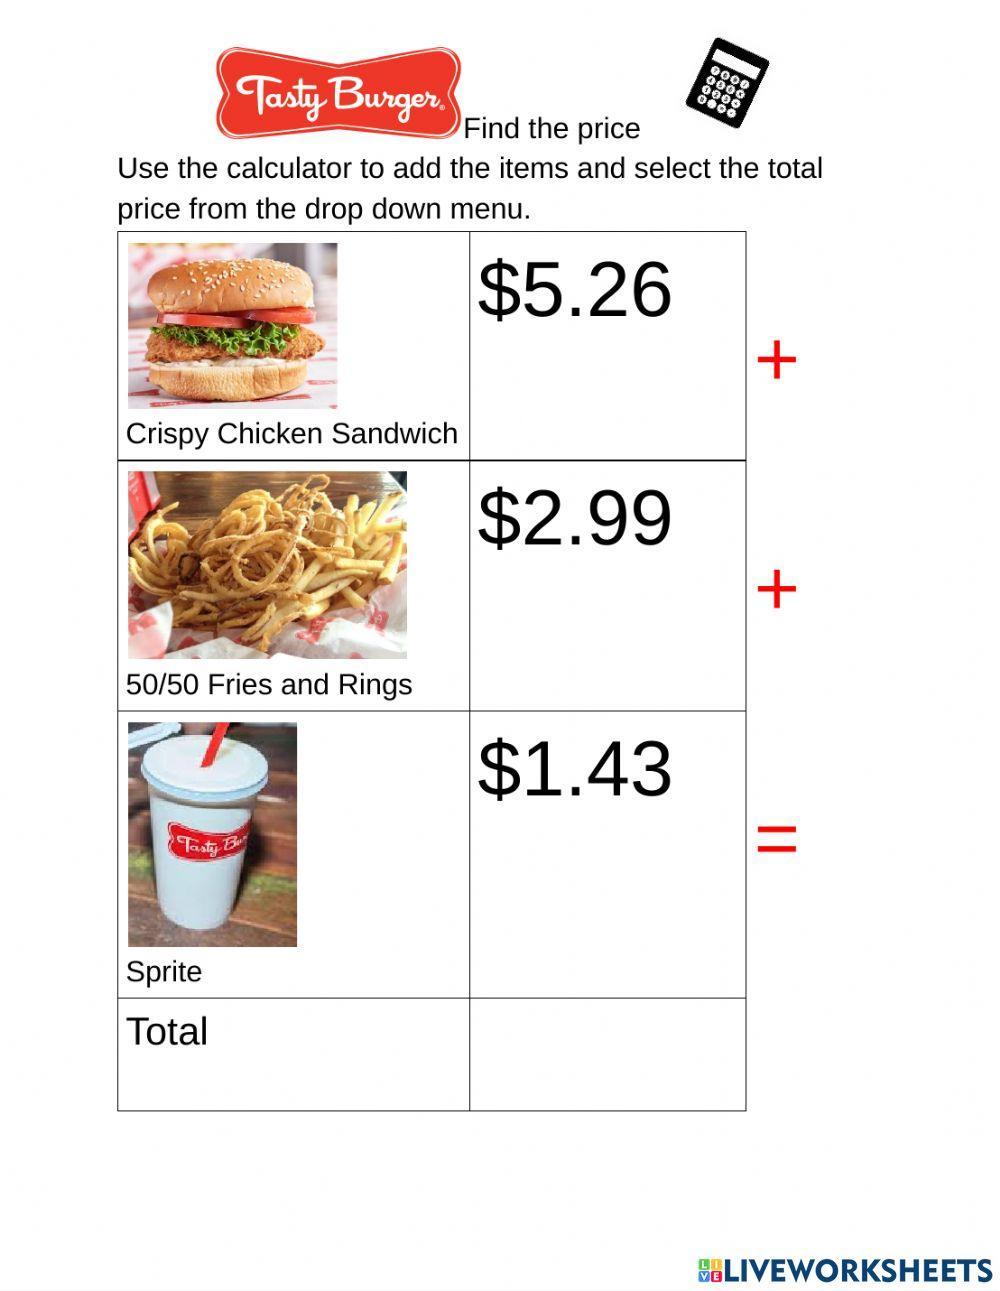 Find the Price Tasty Burger